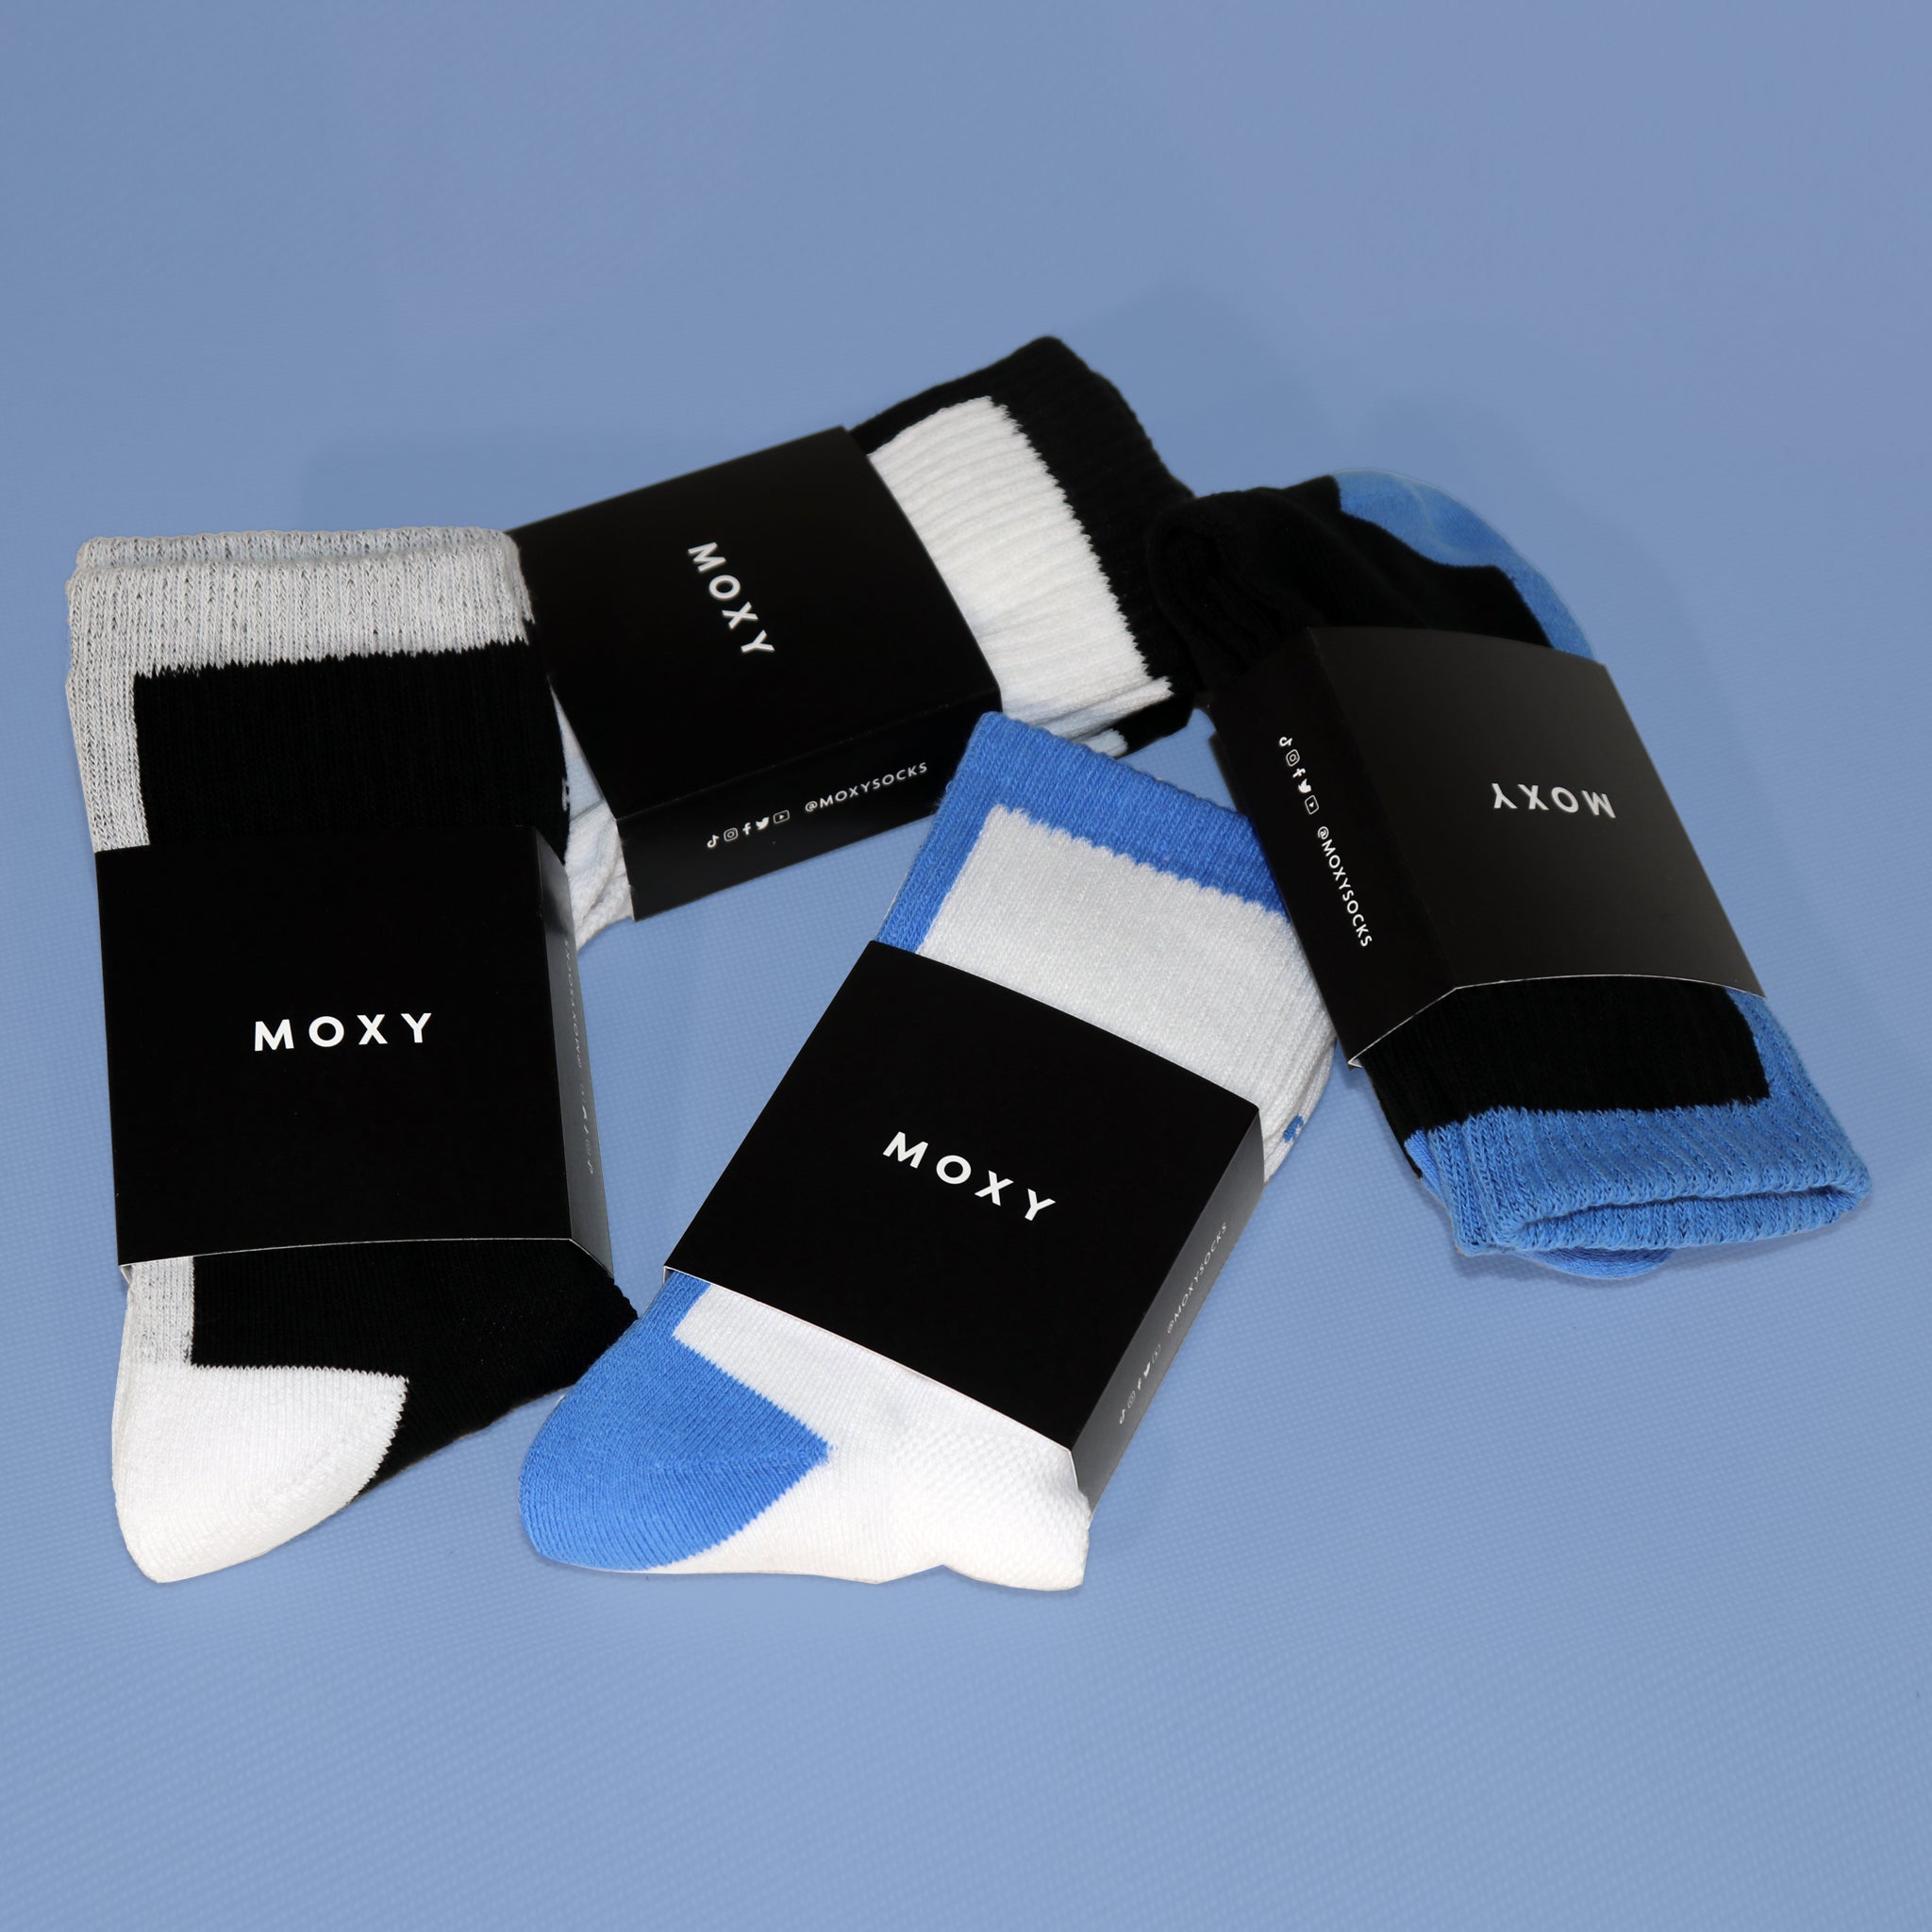 Moxy Socks